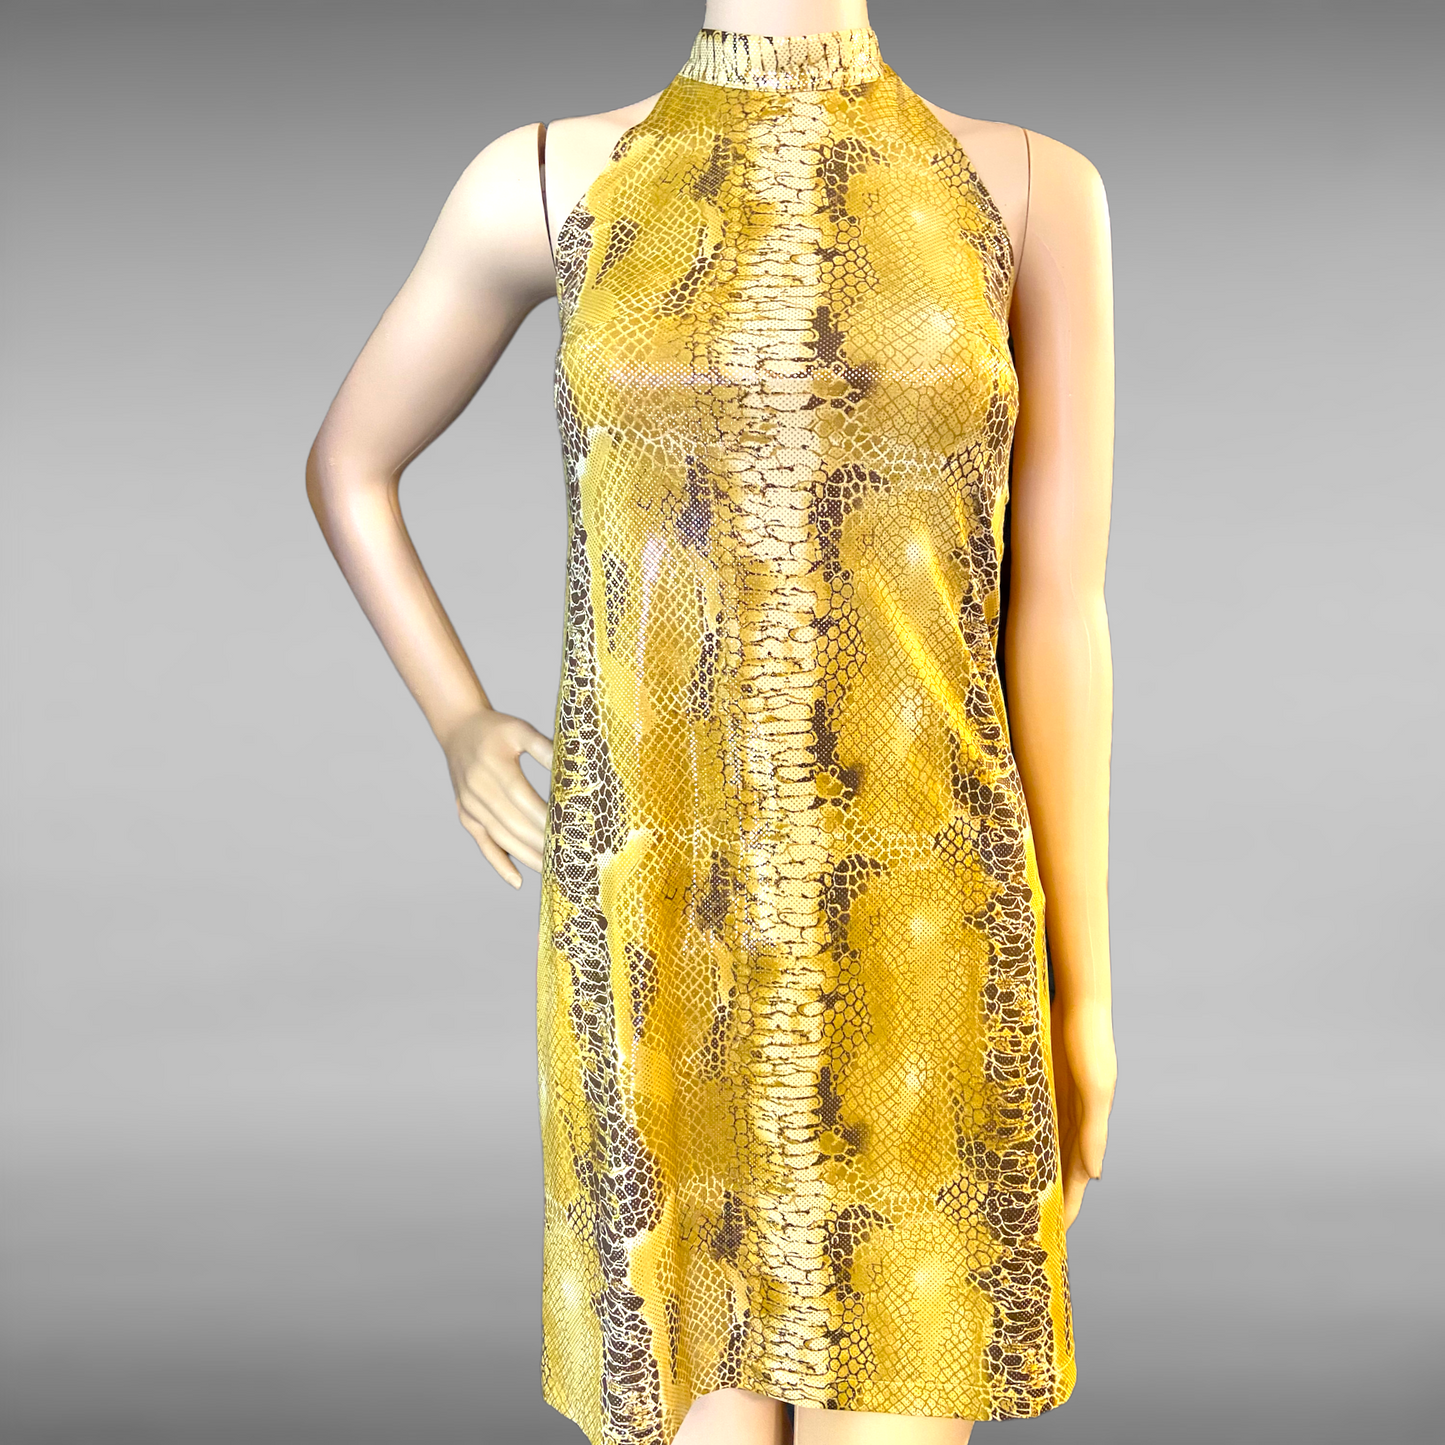 Gold Lame Dress Size 8-10